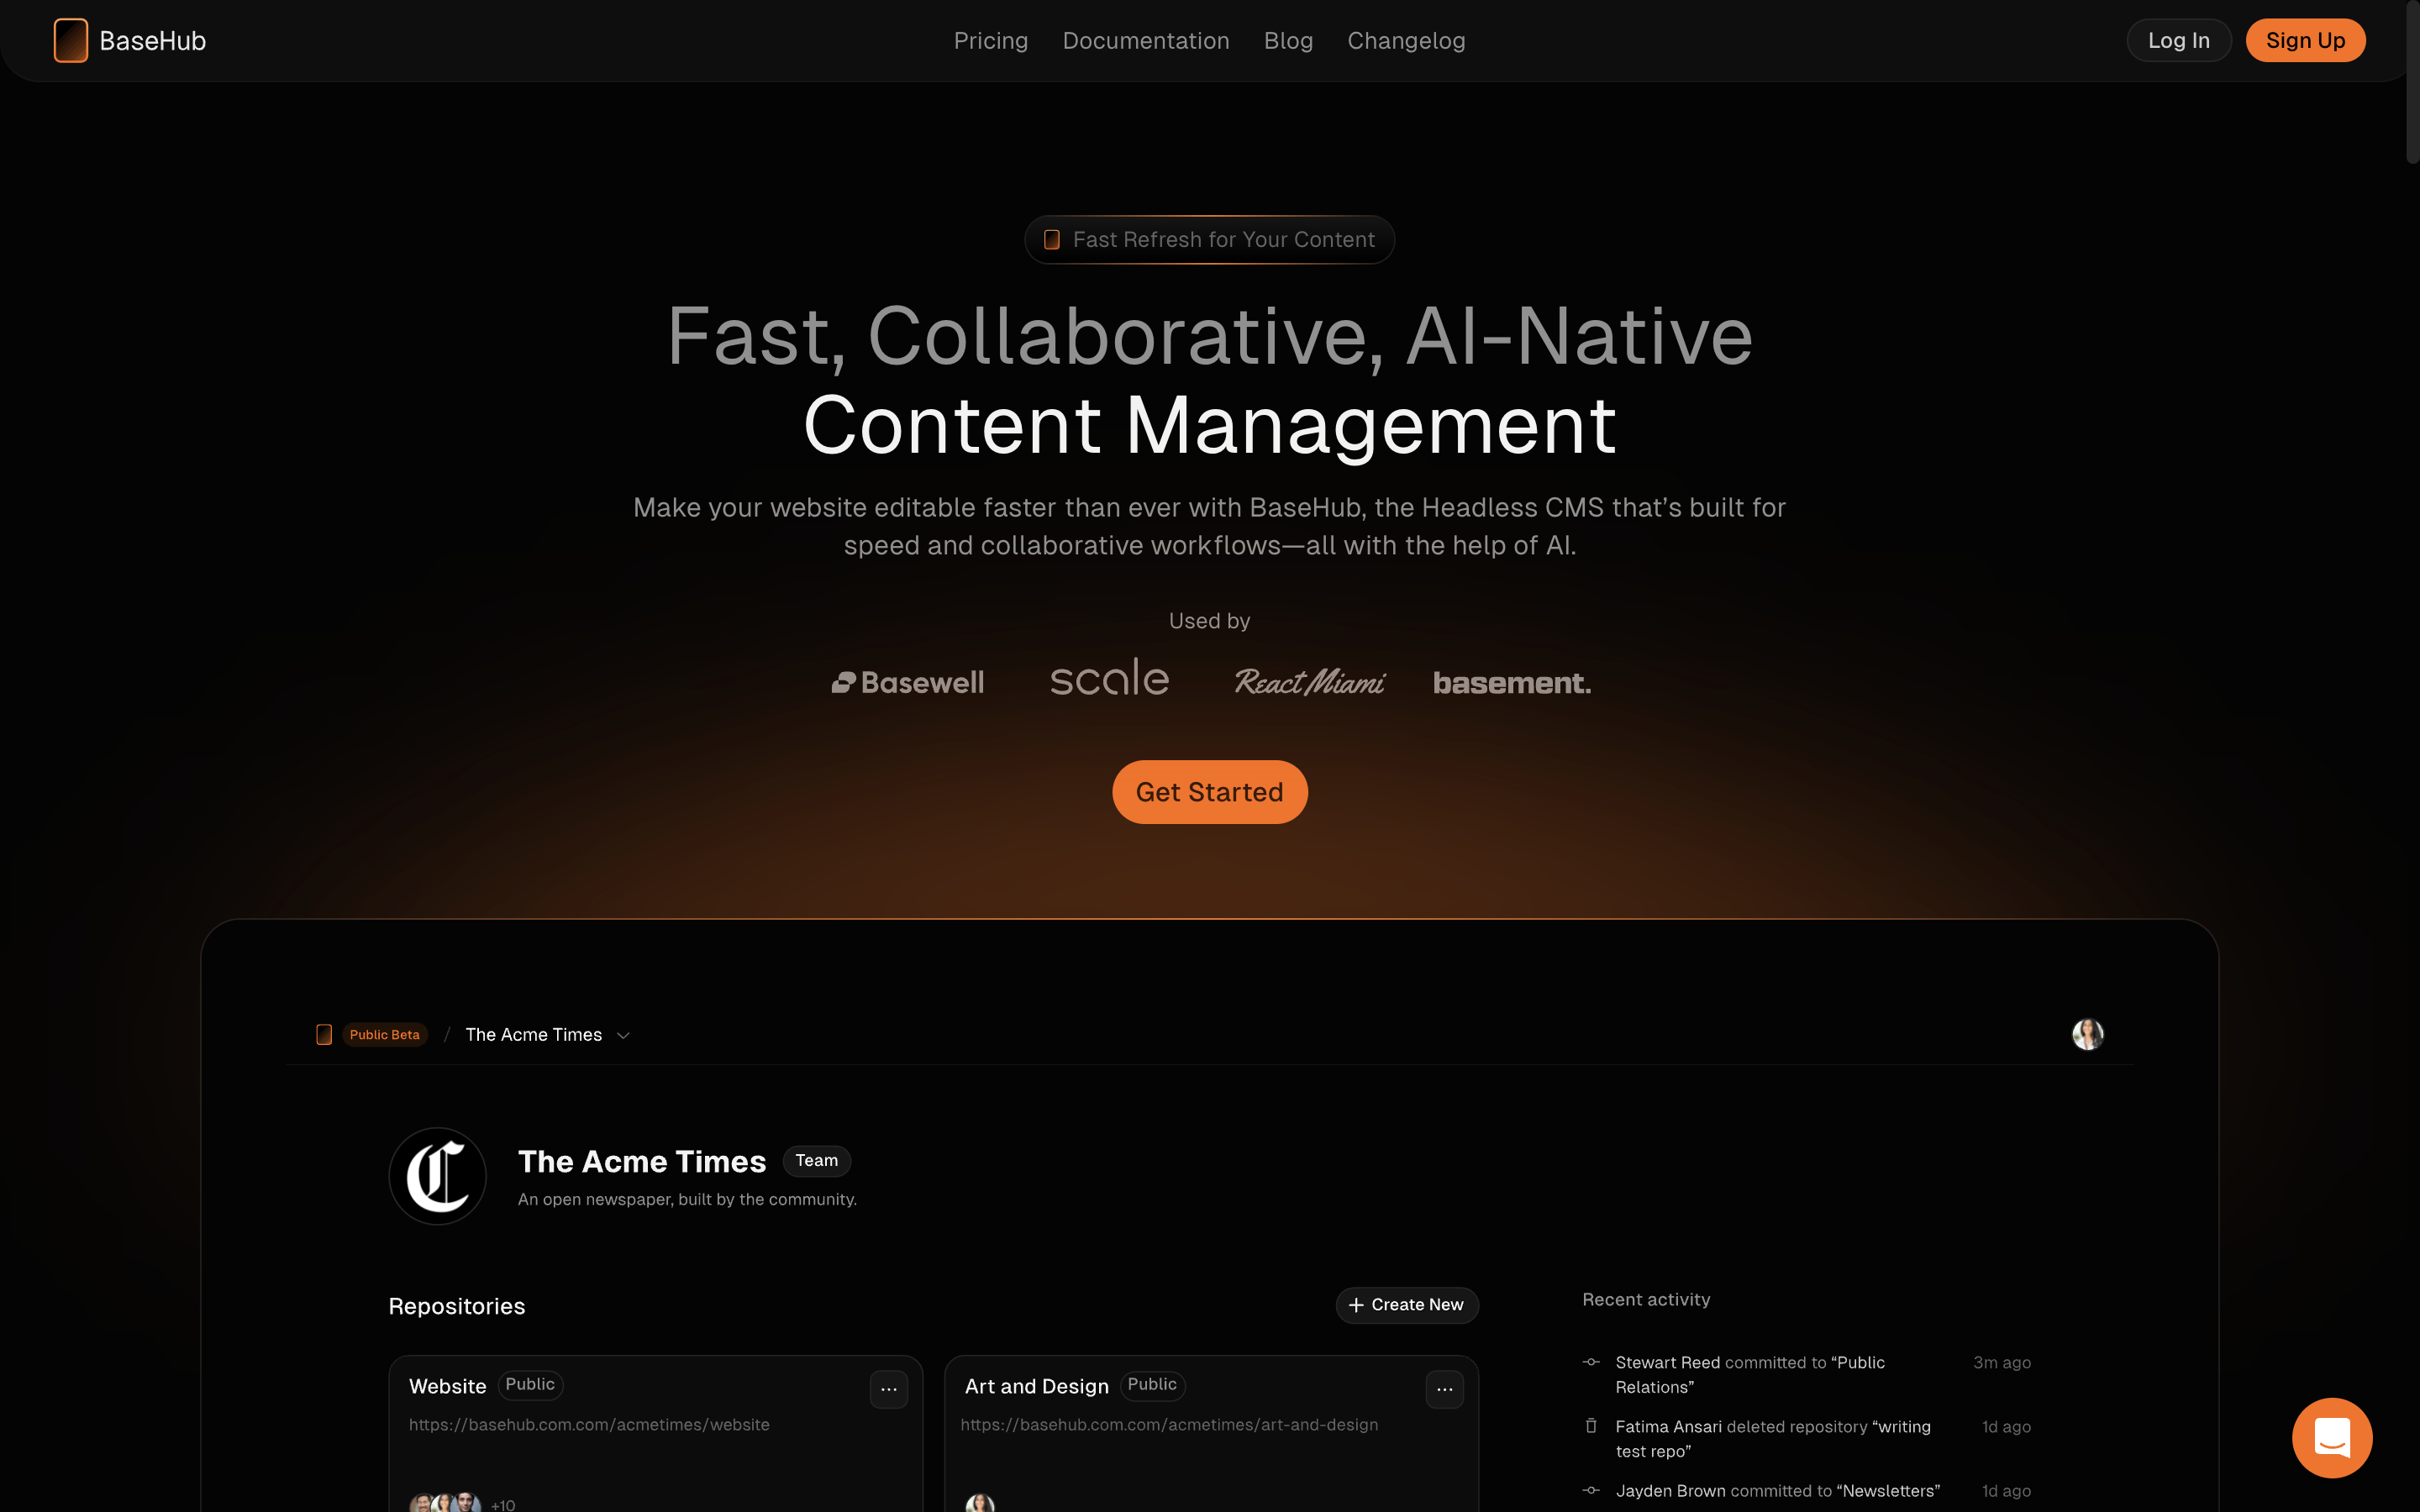 Fast, Collaborative, AI-Native Content Management